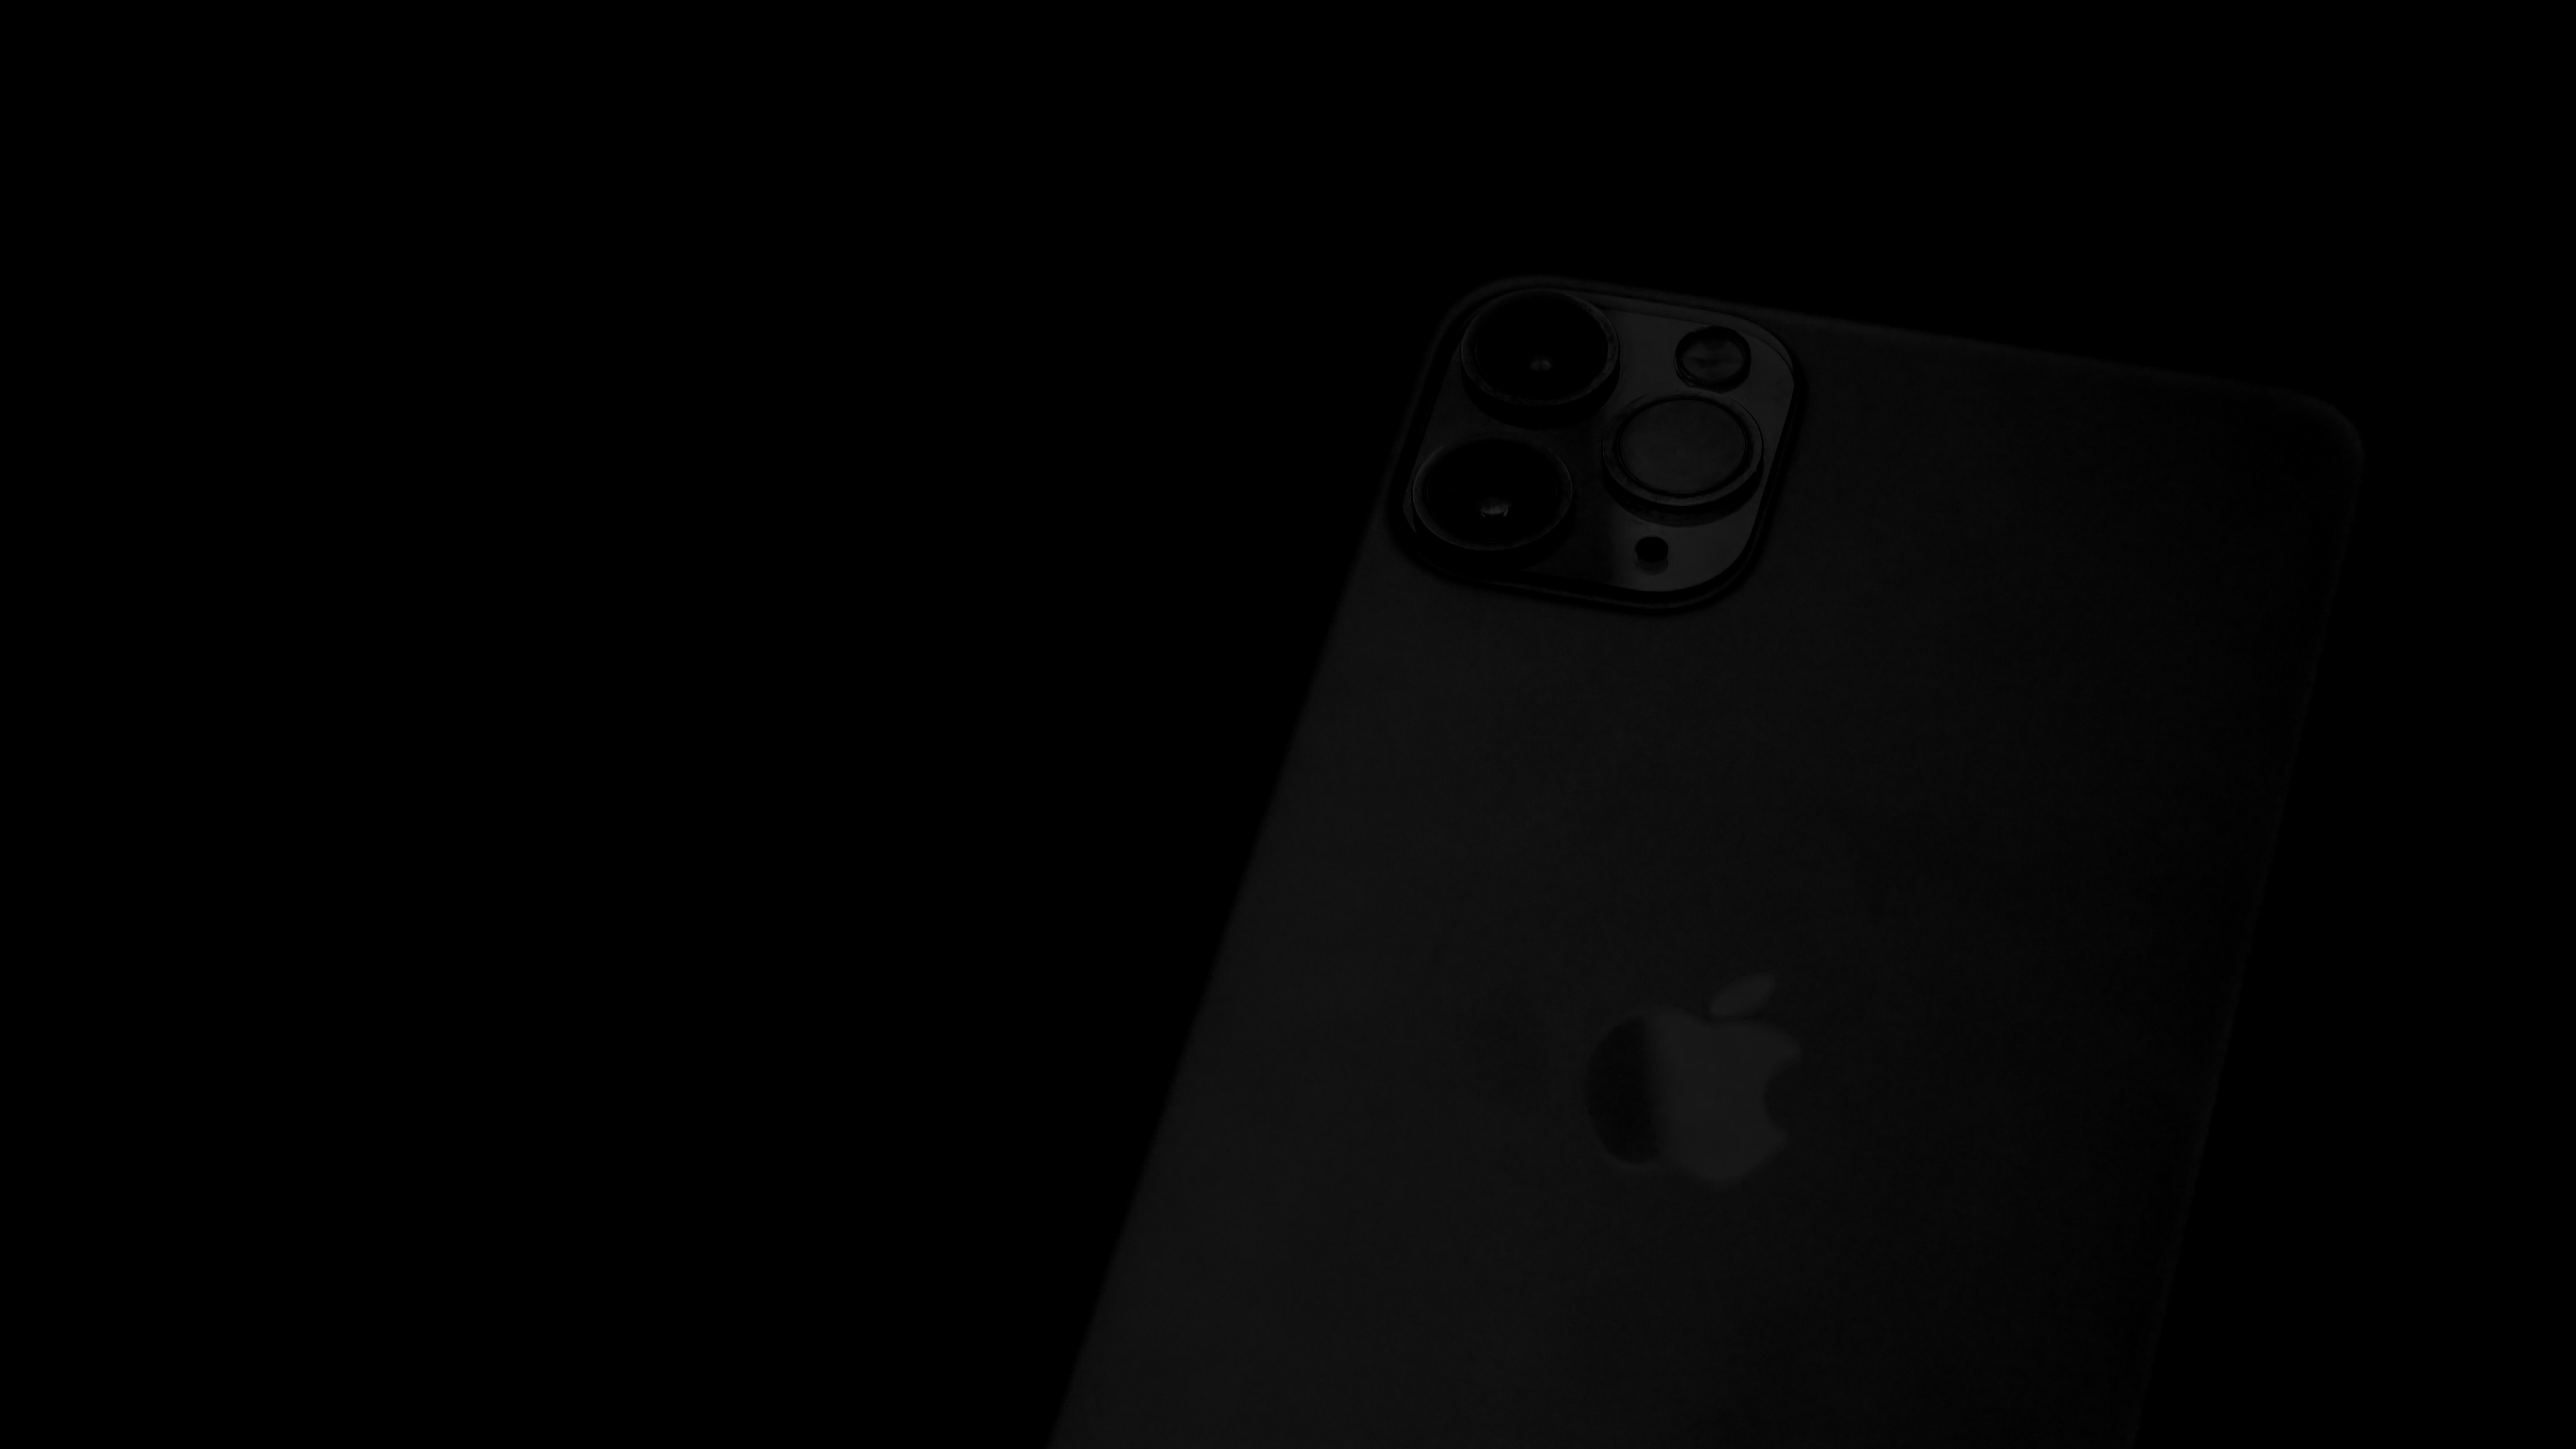 black iphone 7 on black surface